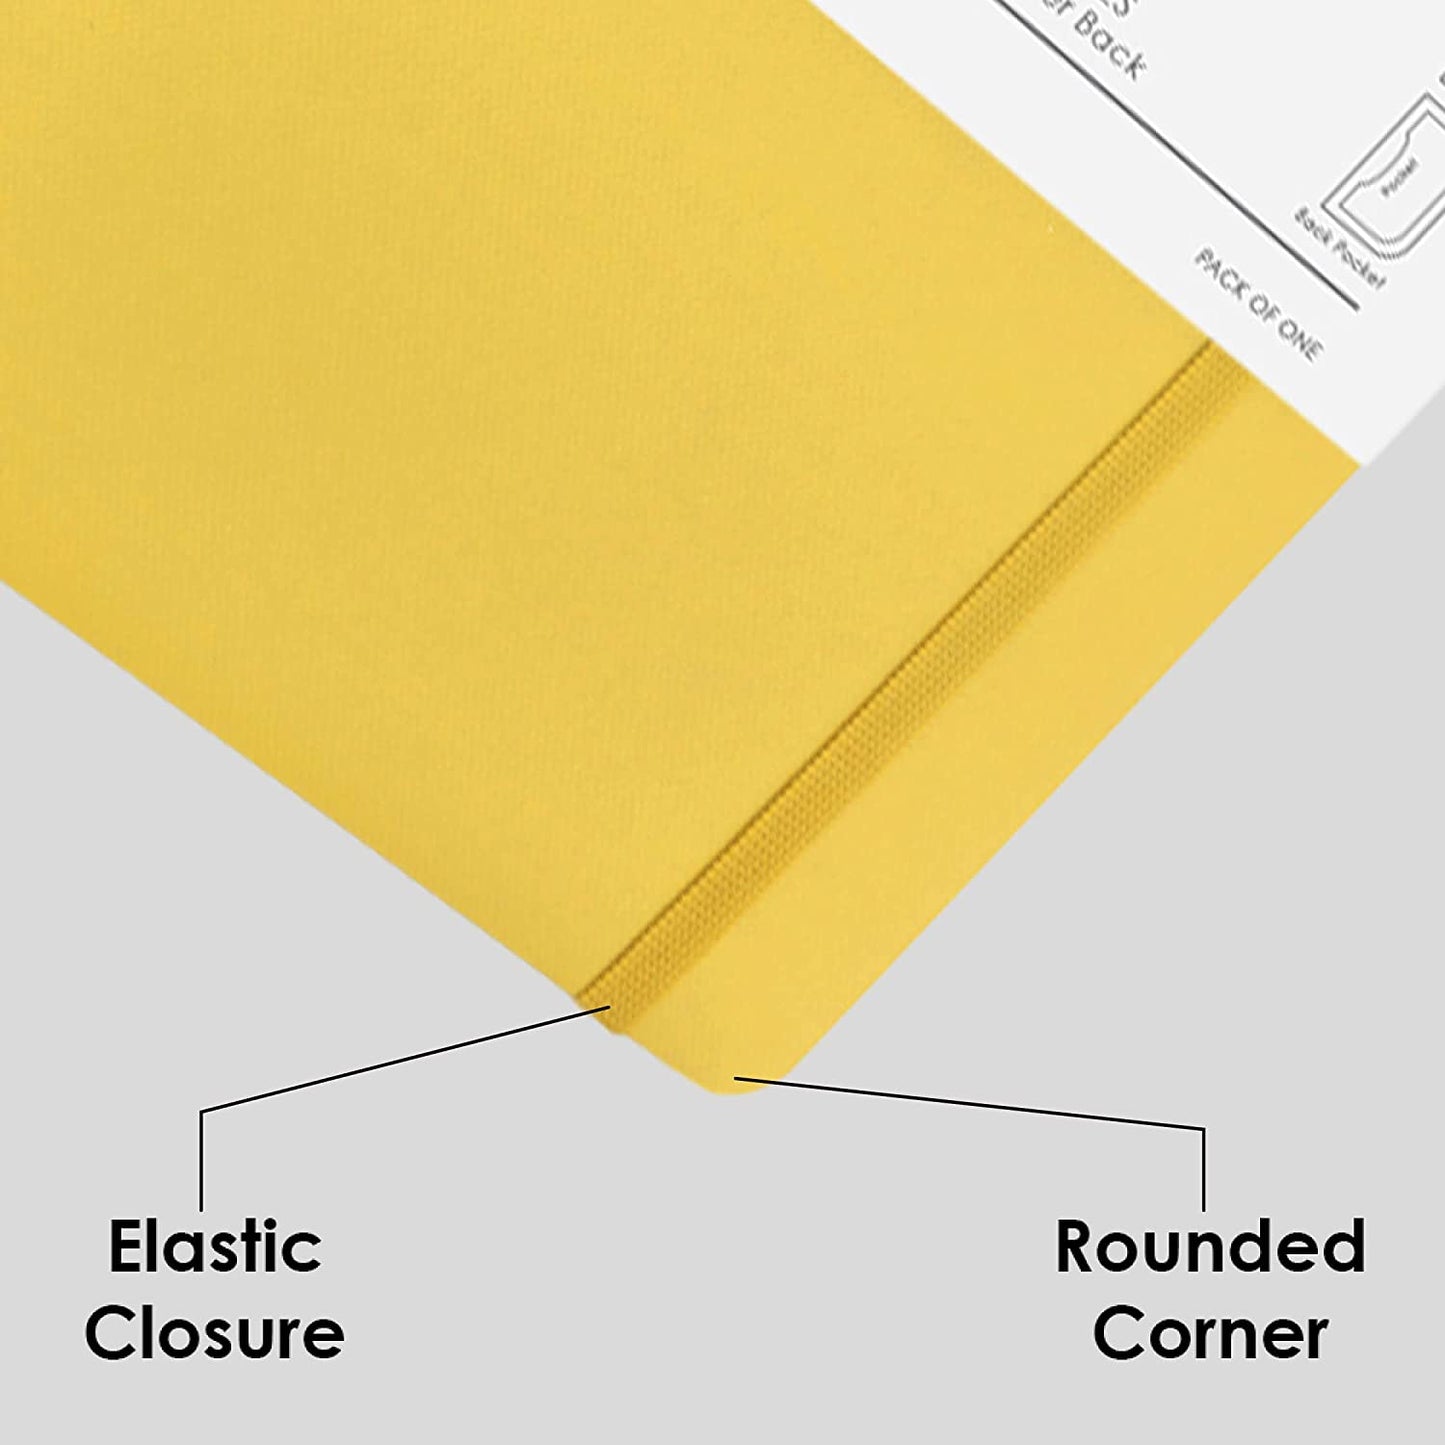 Mypaperclip Executive Series Notebook, Medium (127 X 210Mm, 5 X 8.25 In.) Checks, Esx192M-C Yellow